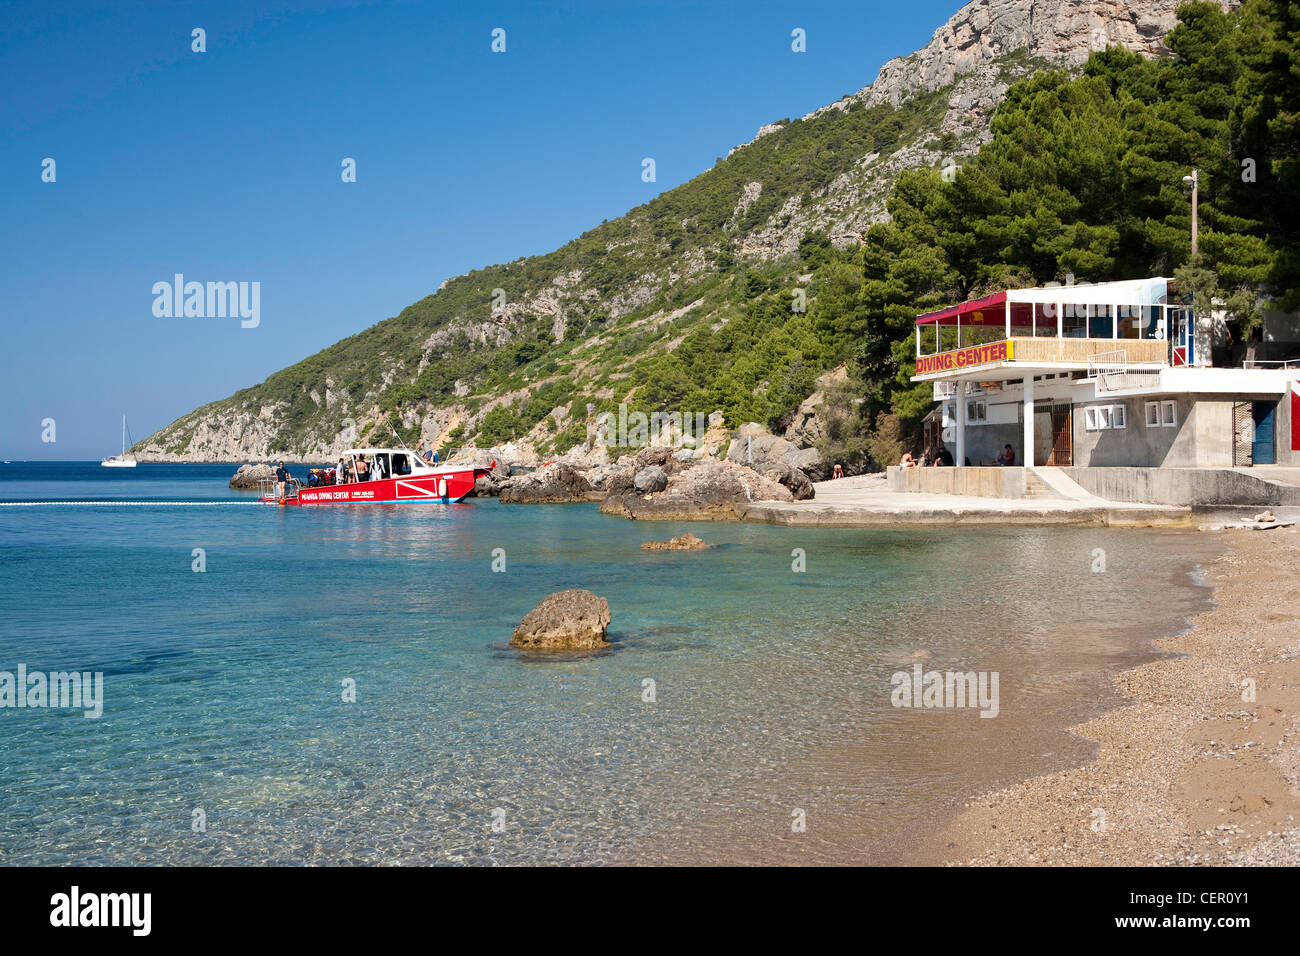 Diving Center at Komiza on Vis Island, Adriatic Sea, Croatia Stock Photo